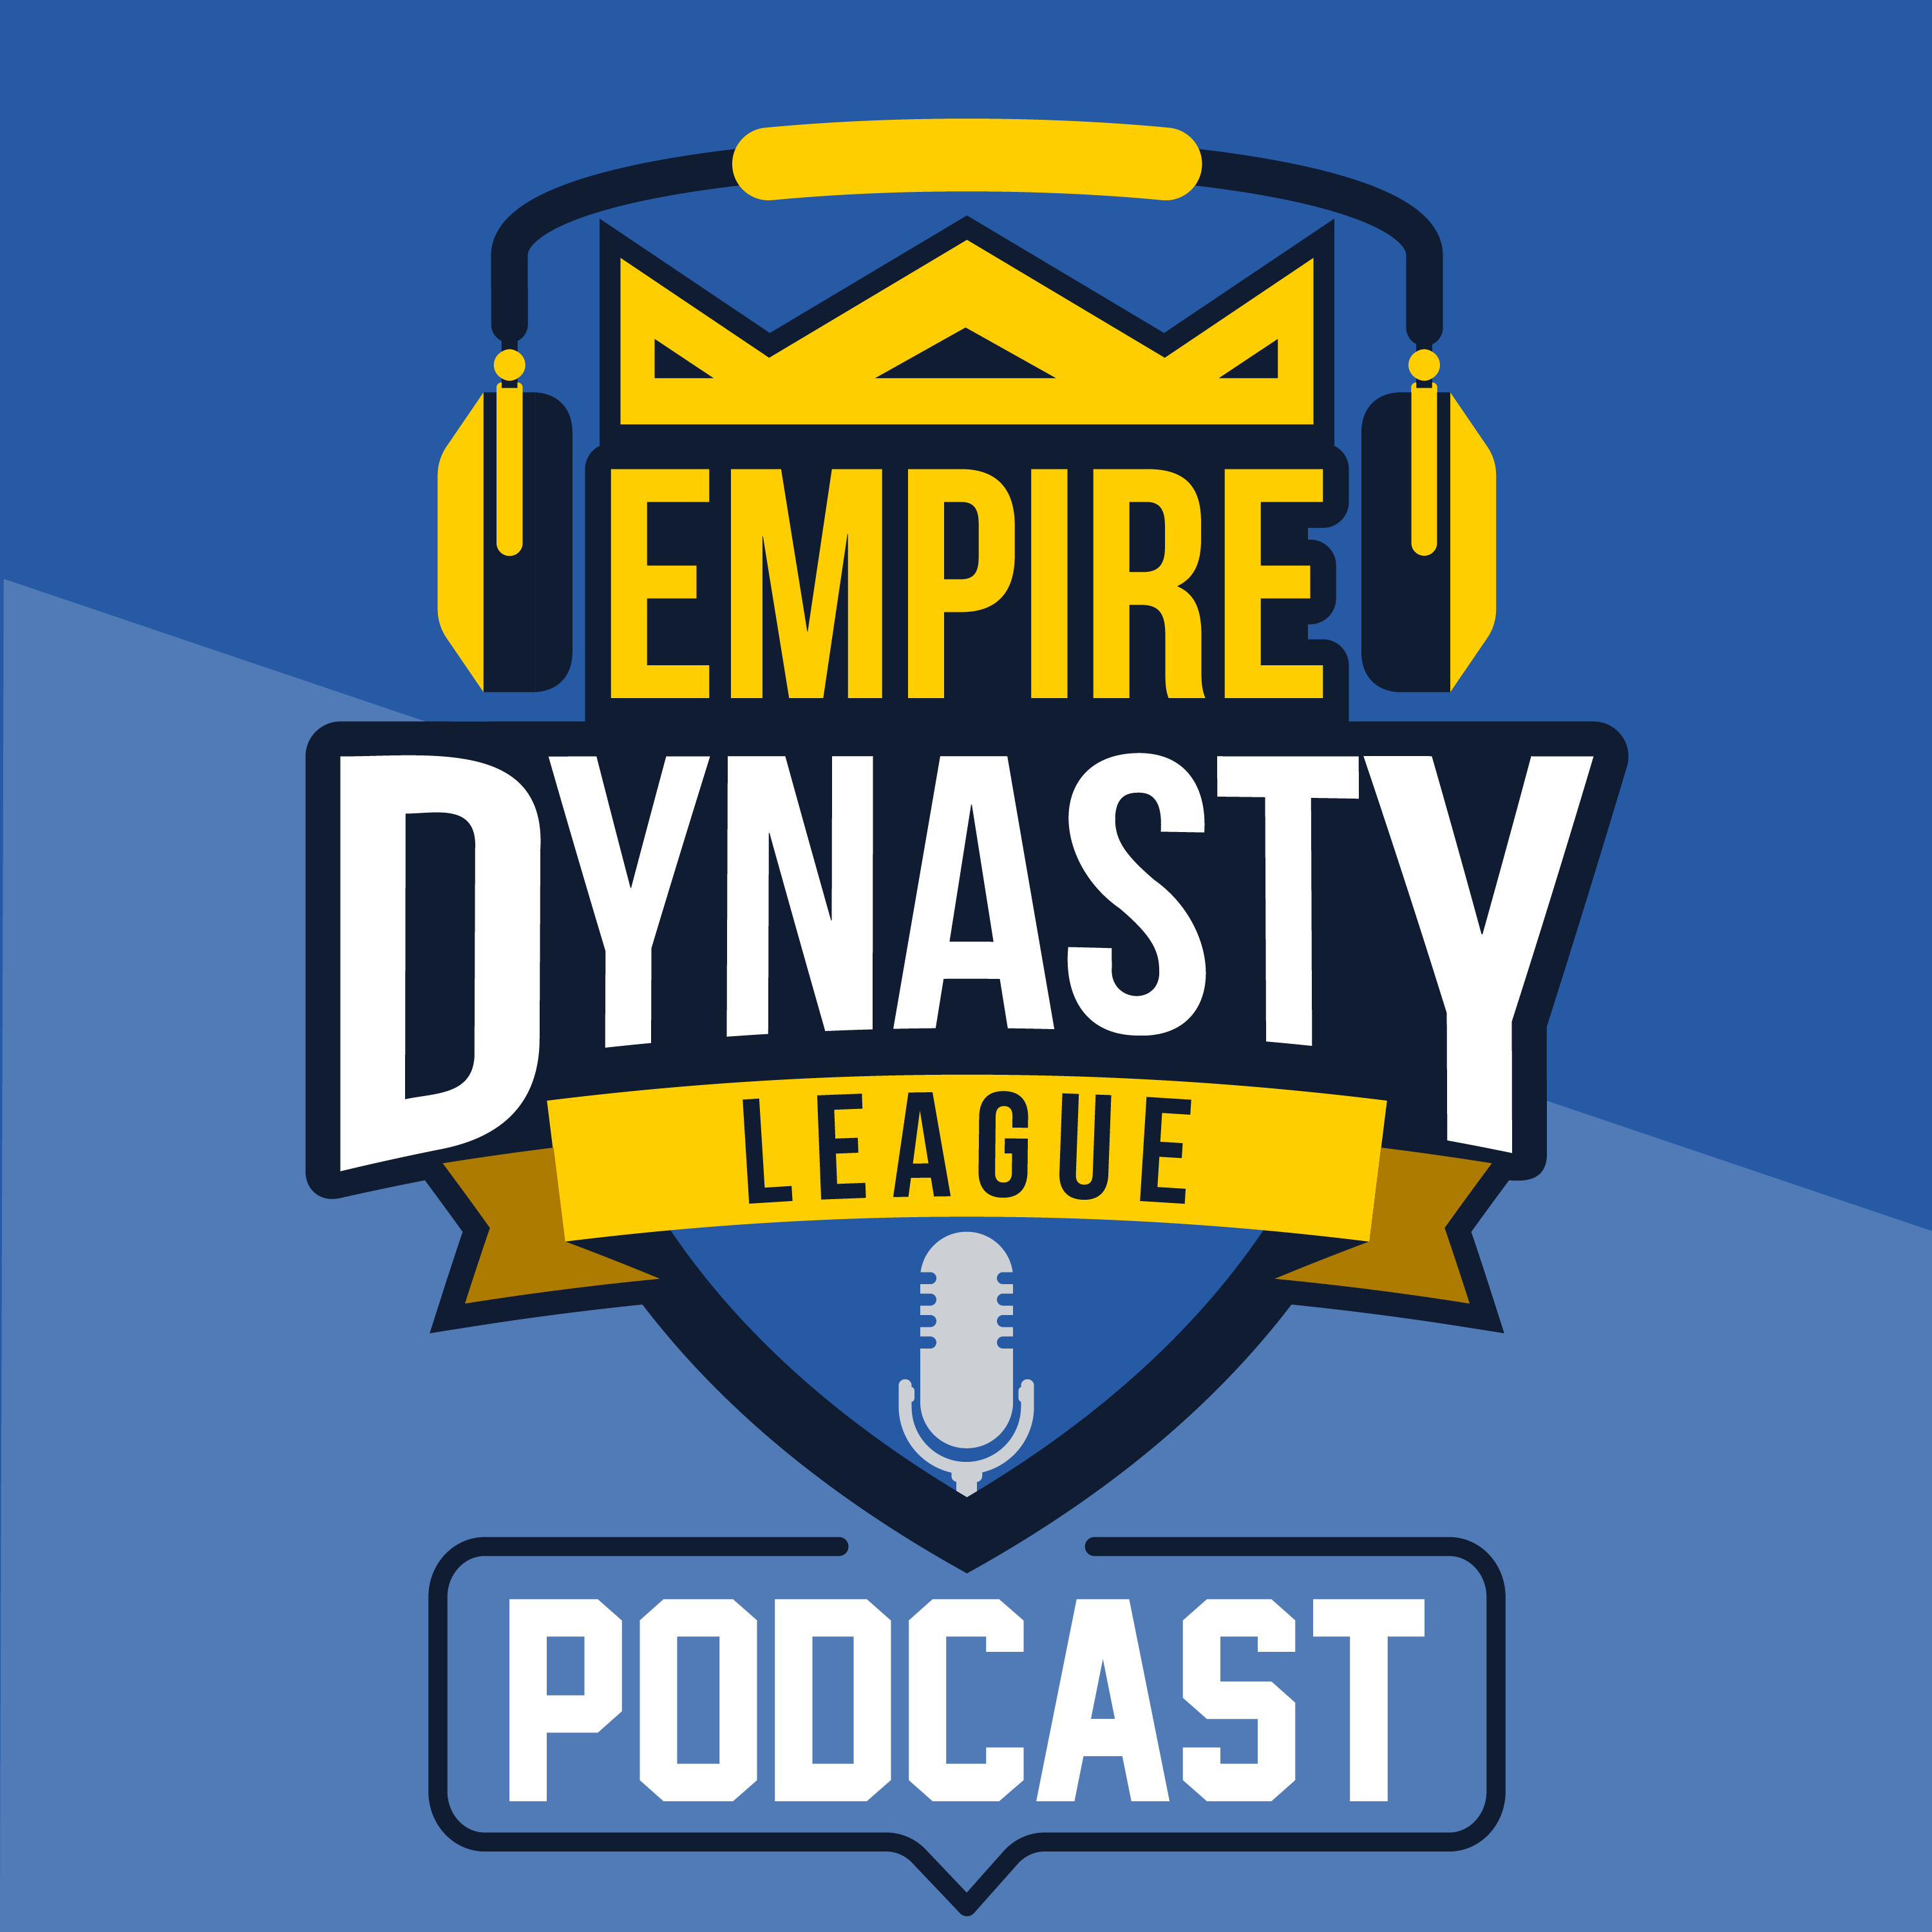 Empire Dynasty League Podcast